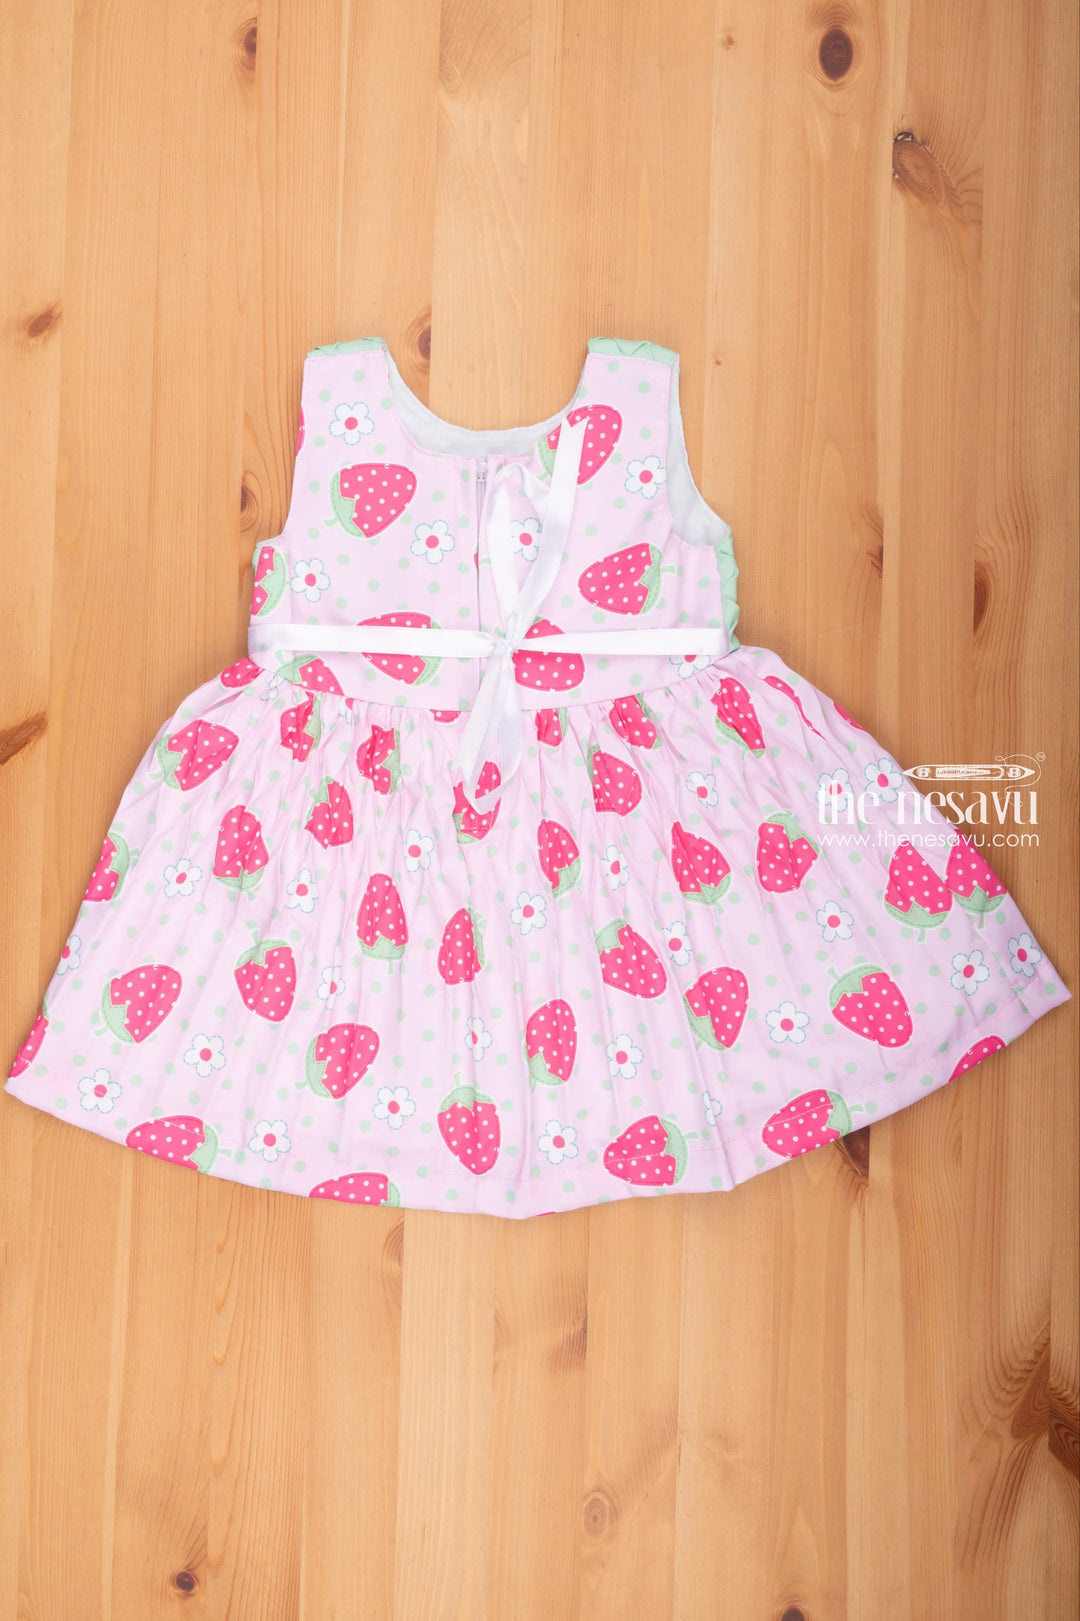 The Nesavu Baby Fancy Frock Pretty in Pink: Strawberry Print Cotton Frock for Baby Girls Nesavu Best Newborn Clothes Online | Stylish Baby Girl Frock | the Nesavu